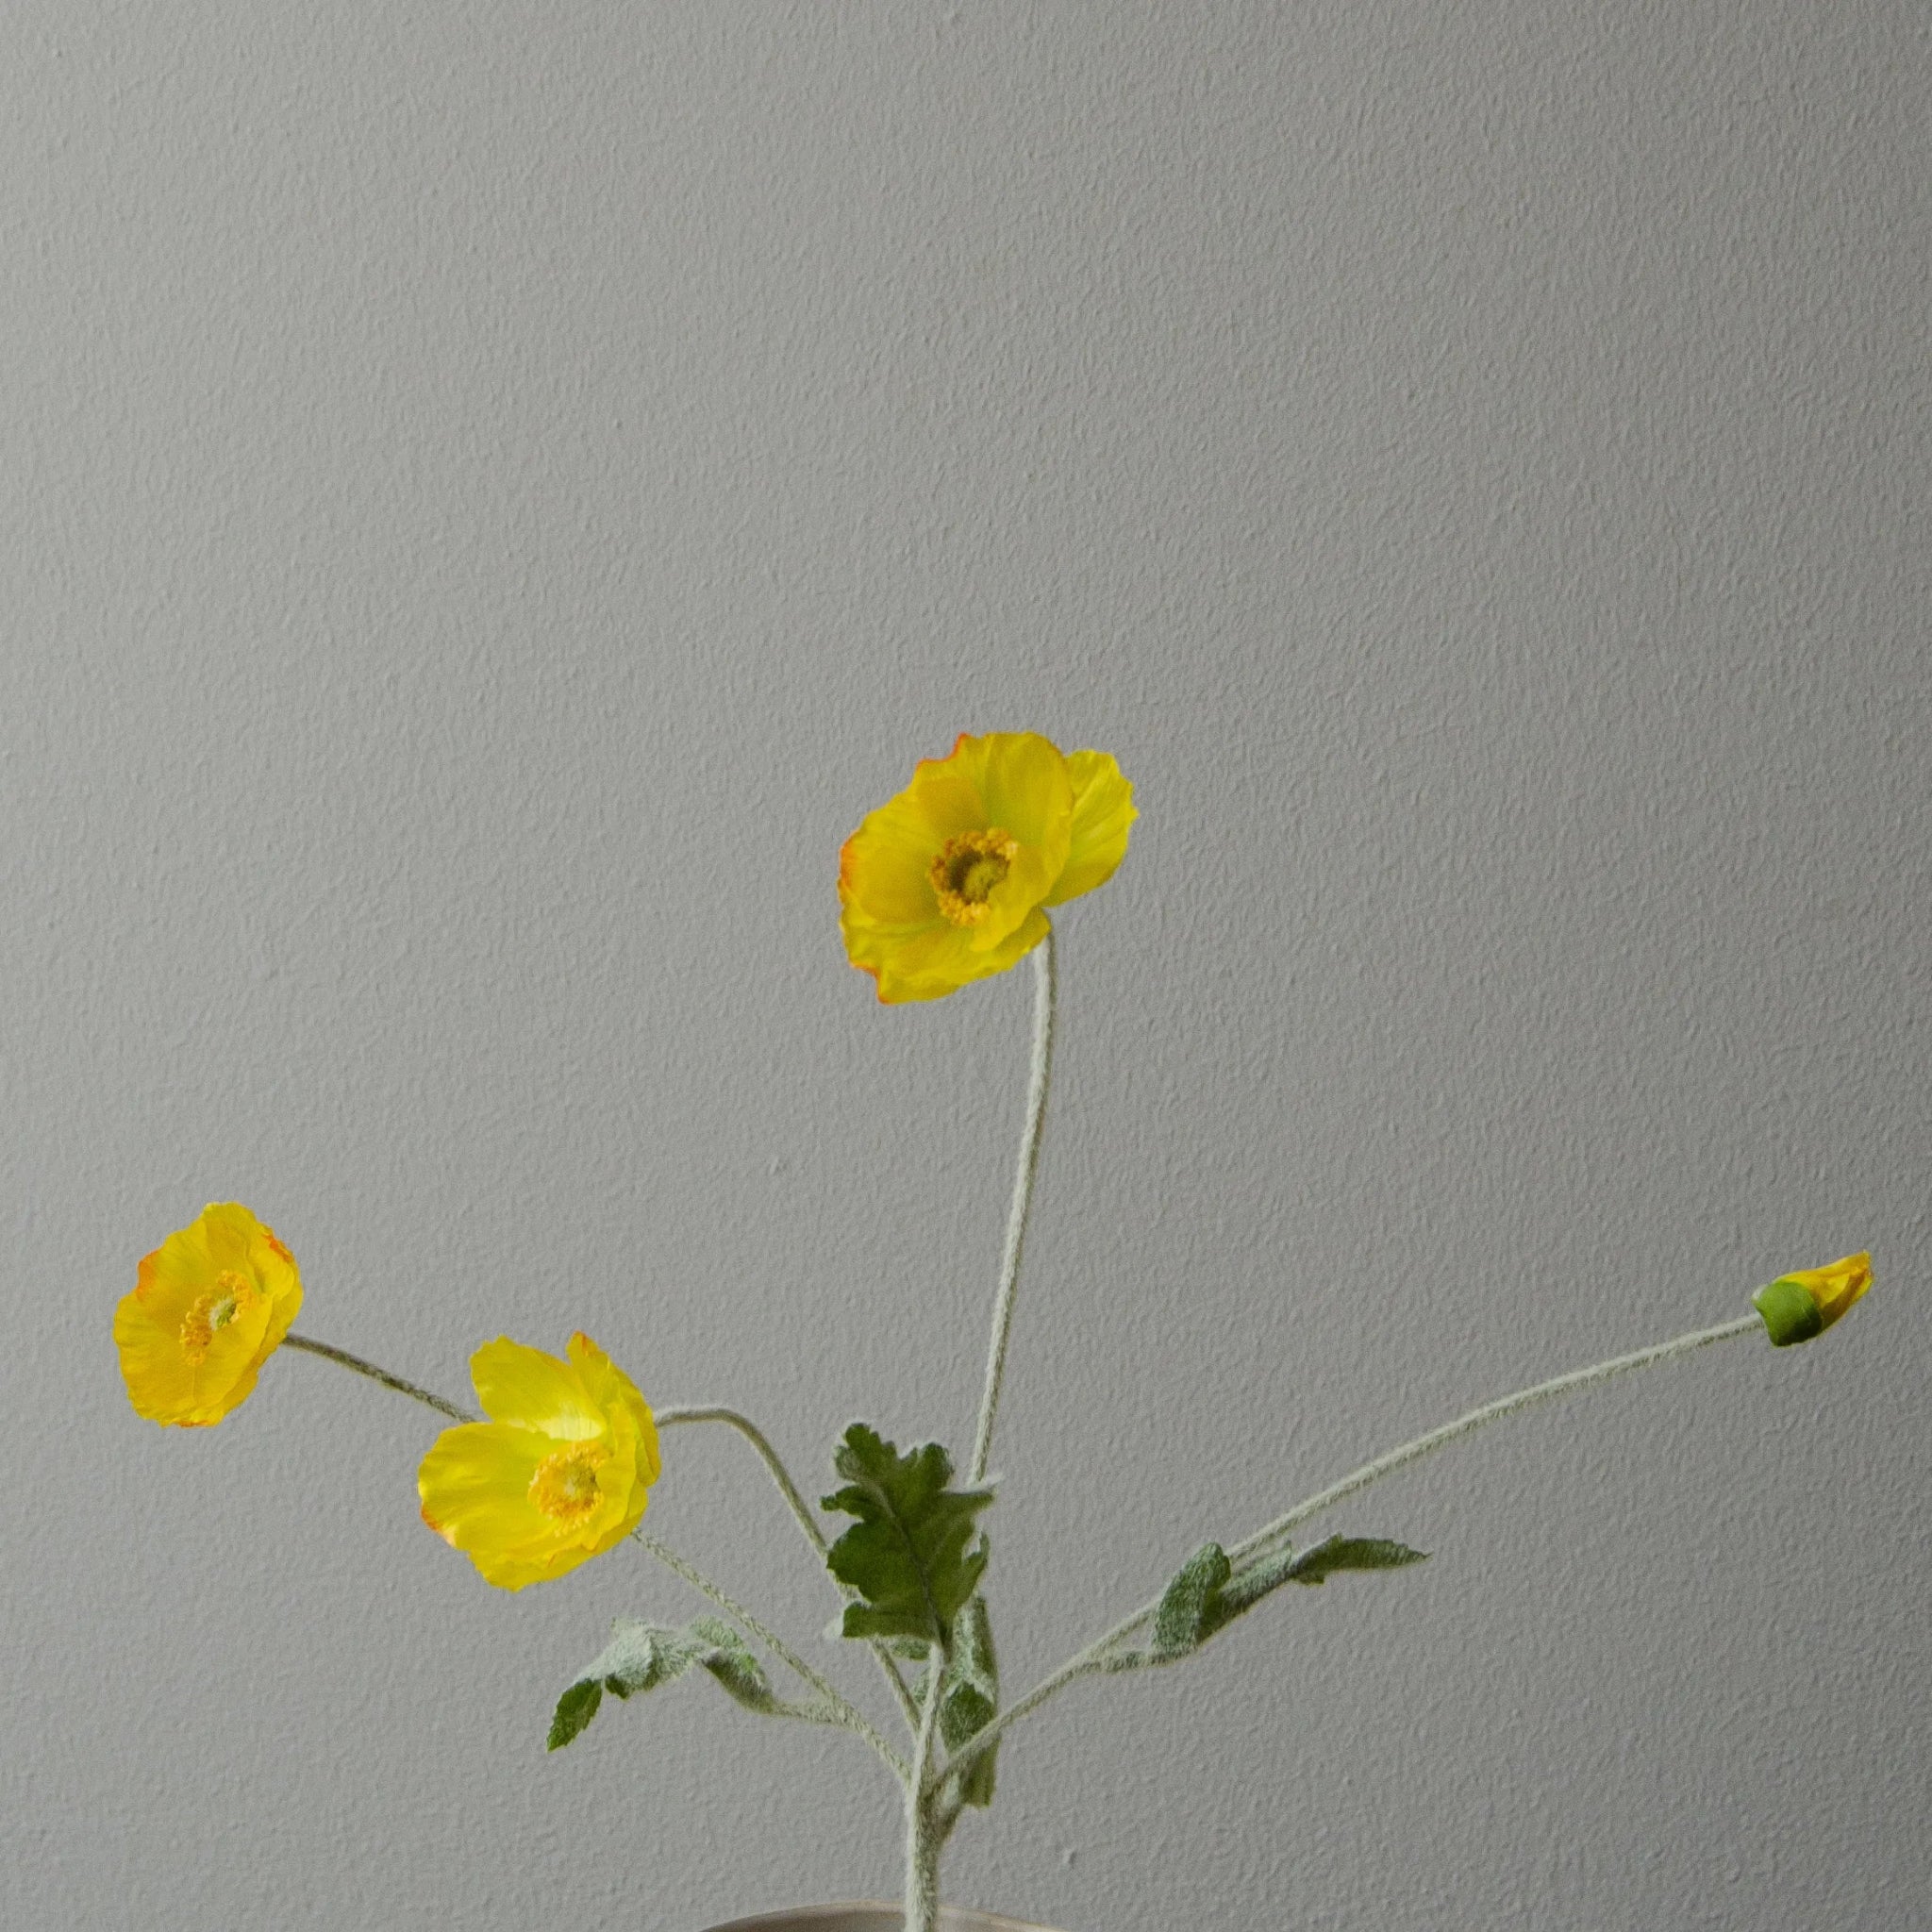 Artificial Poppy Flower from Botané